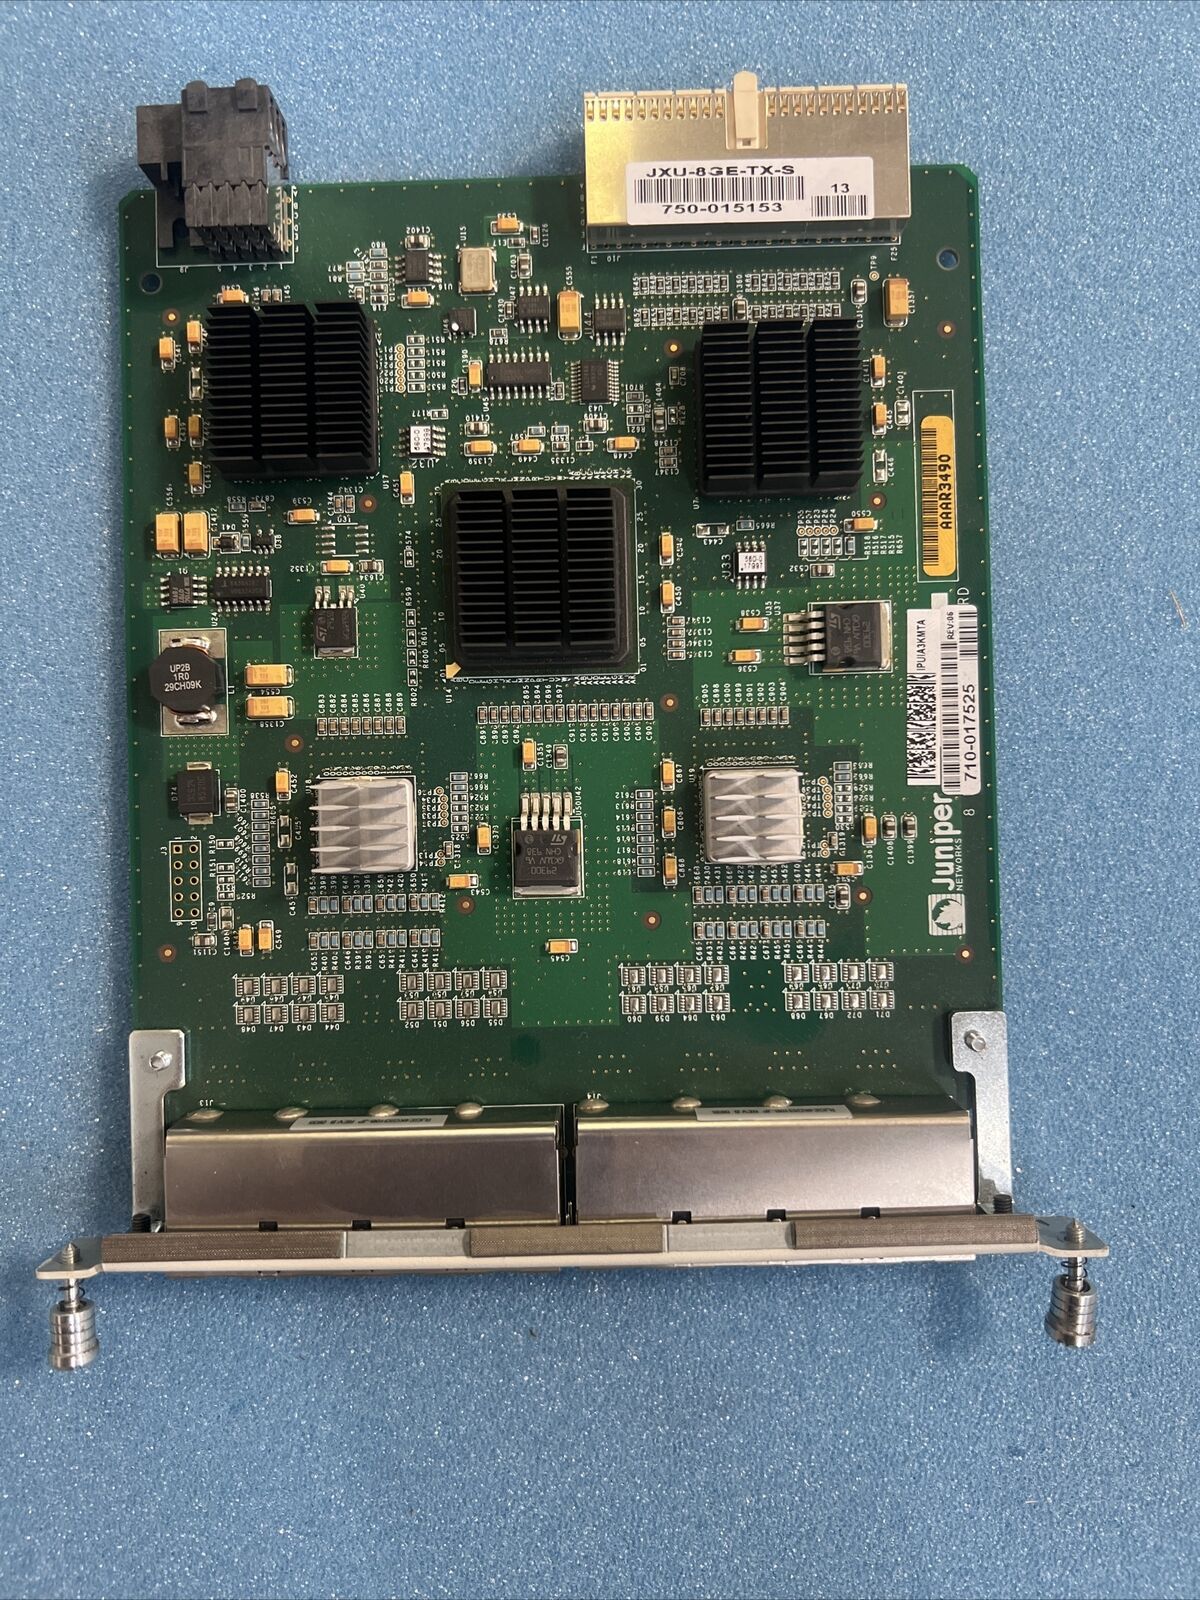 JUNIPER 8-Port Gigabit Ethernet 10/100/1000 Copper JXU-8GE-TX-S 710-017525 